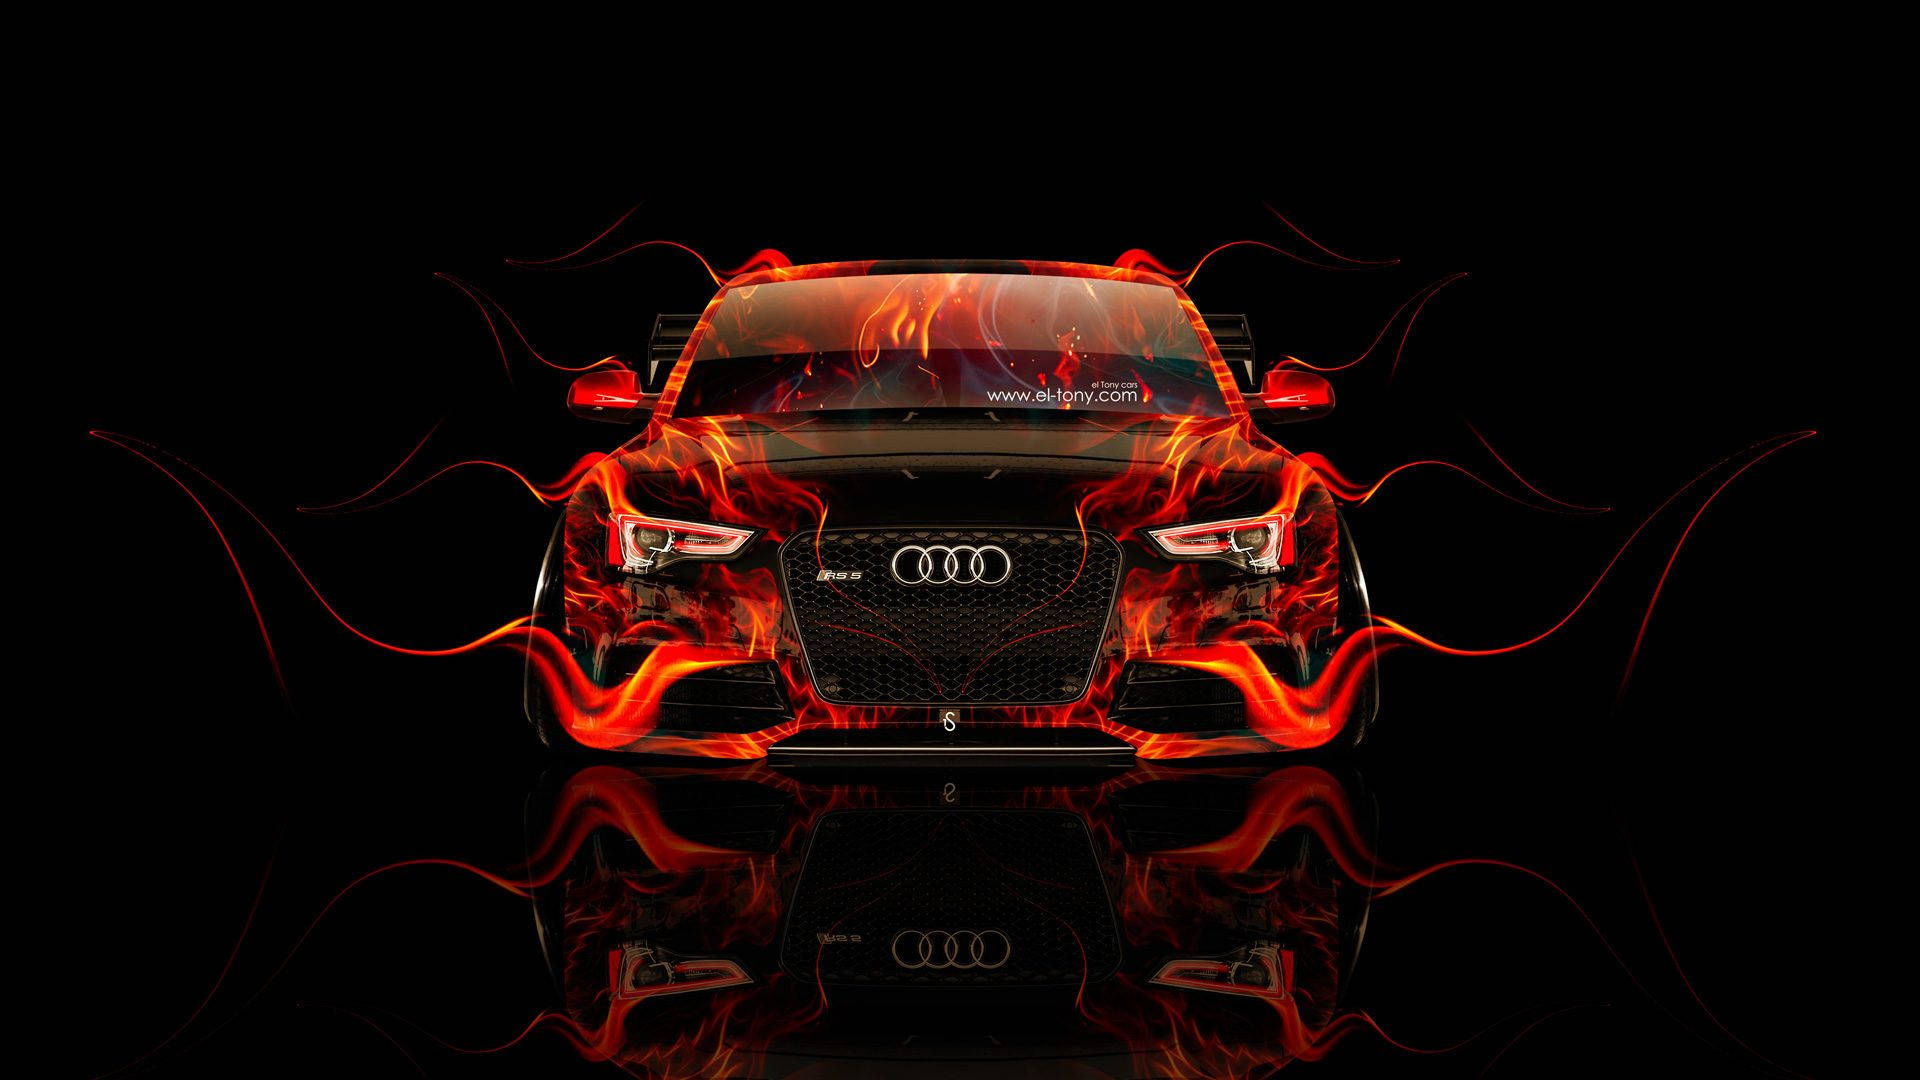 Free Audi Wallpaper Downloads, [100+] Audi Wallpapers for FREE | Wallpapers .com